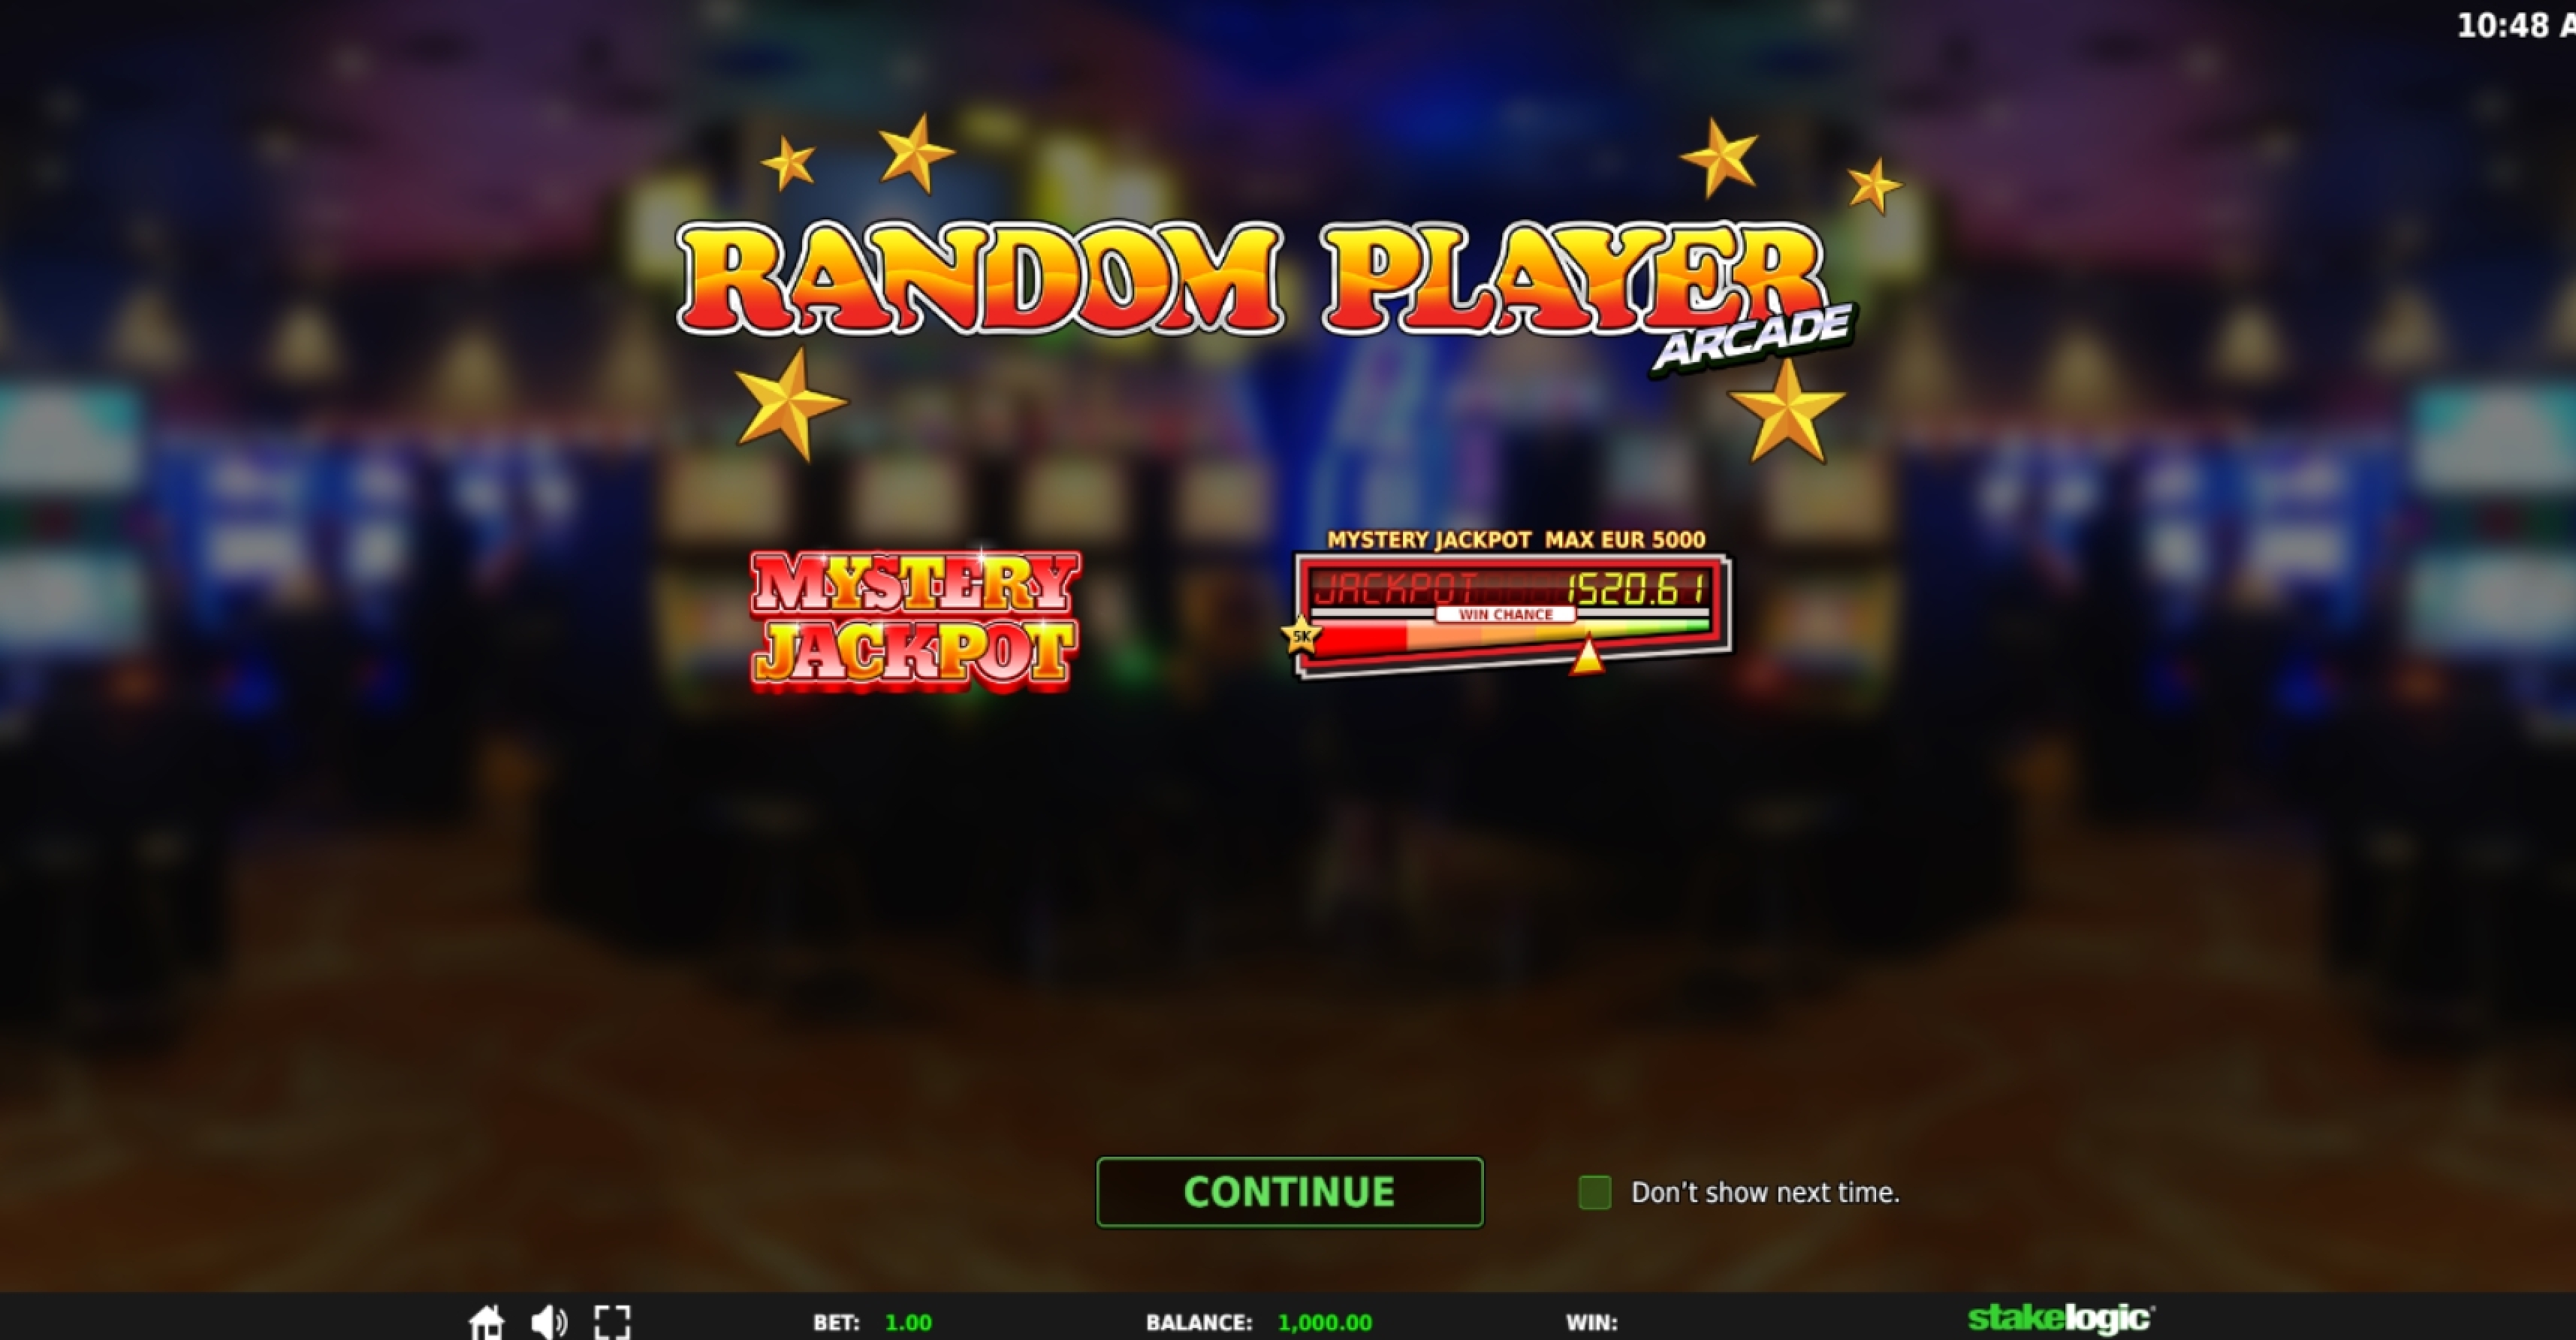 Play Random Player Free Casino Slot Game by Stakelogic